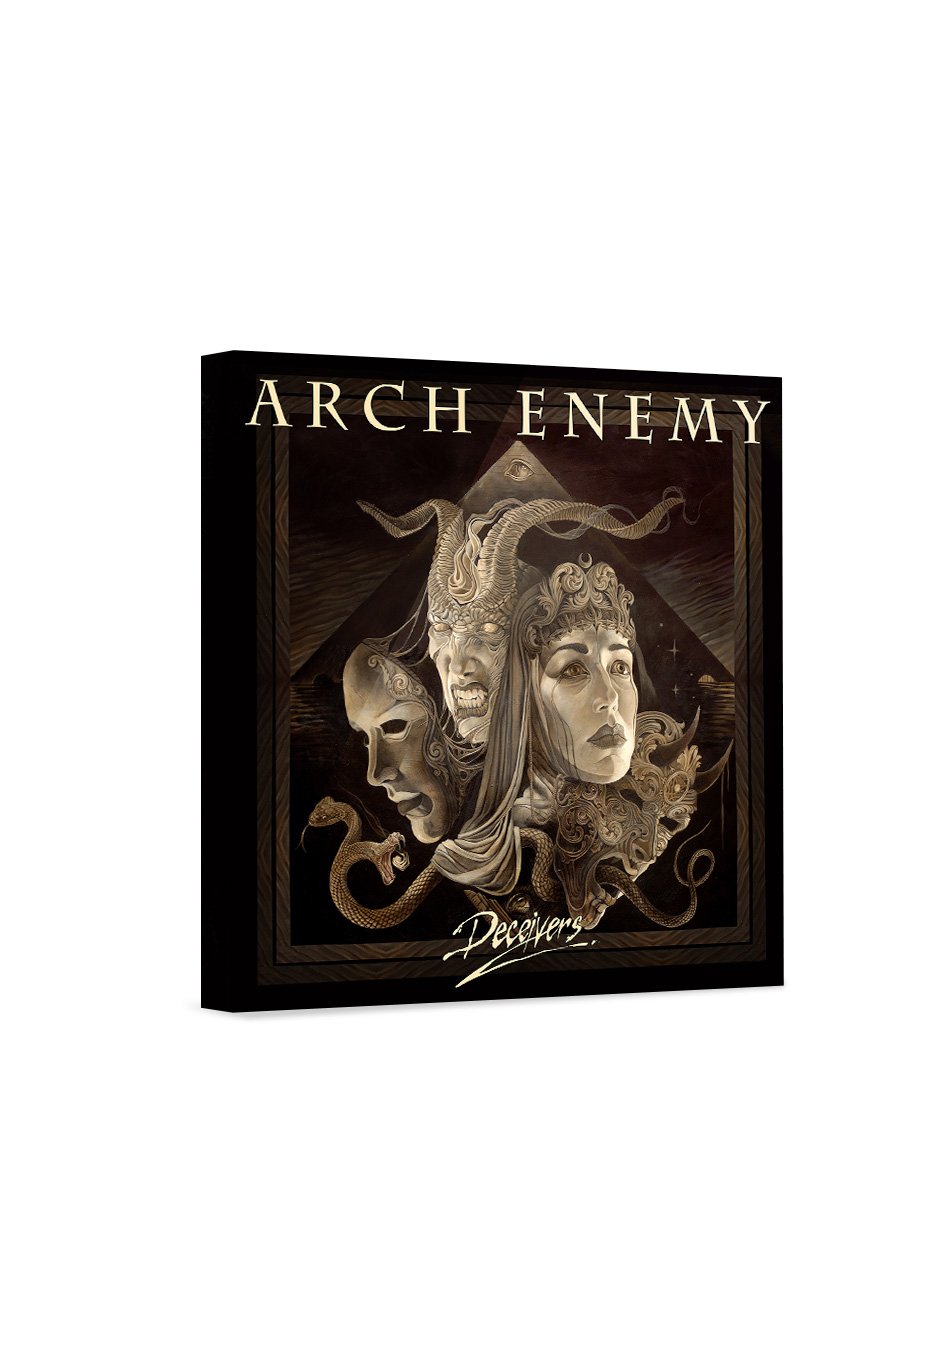 Arch Enemy - Deceivers Ltd. Deluxe - CD Box Set